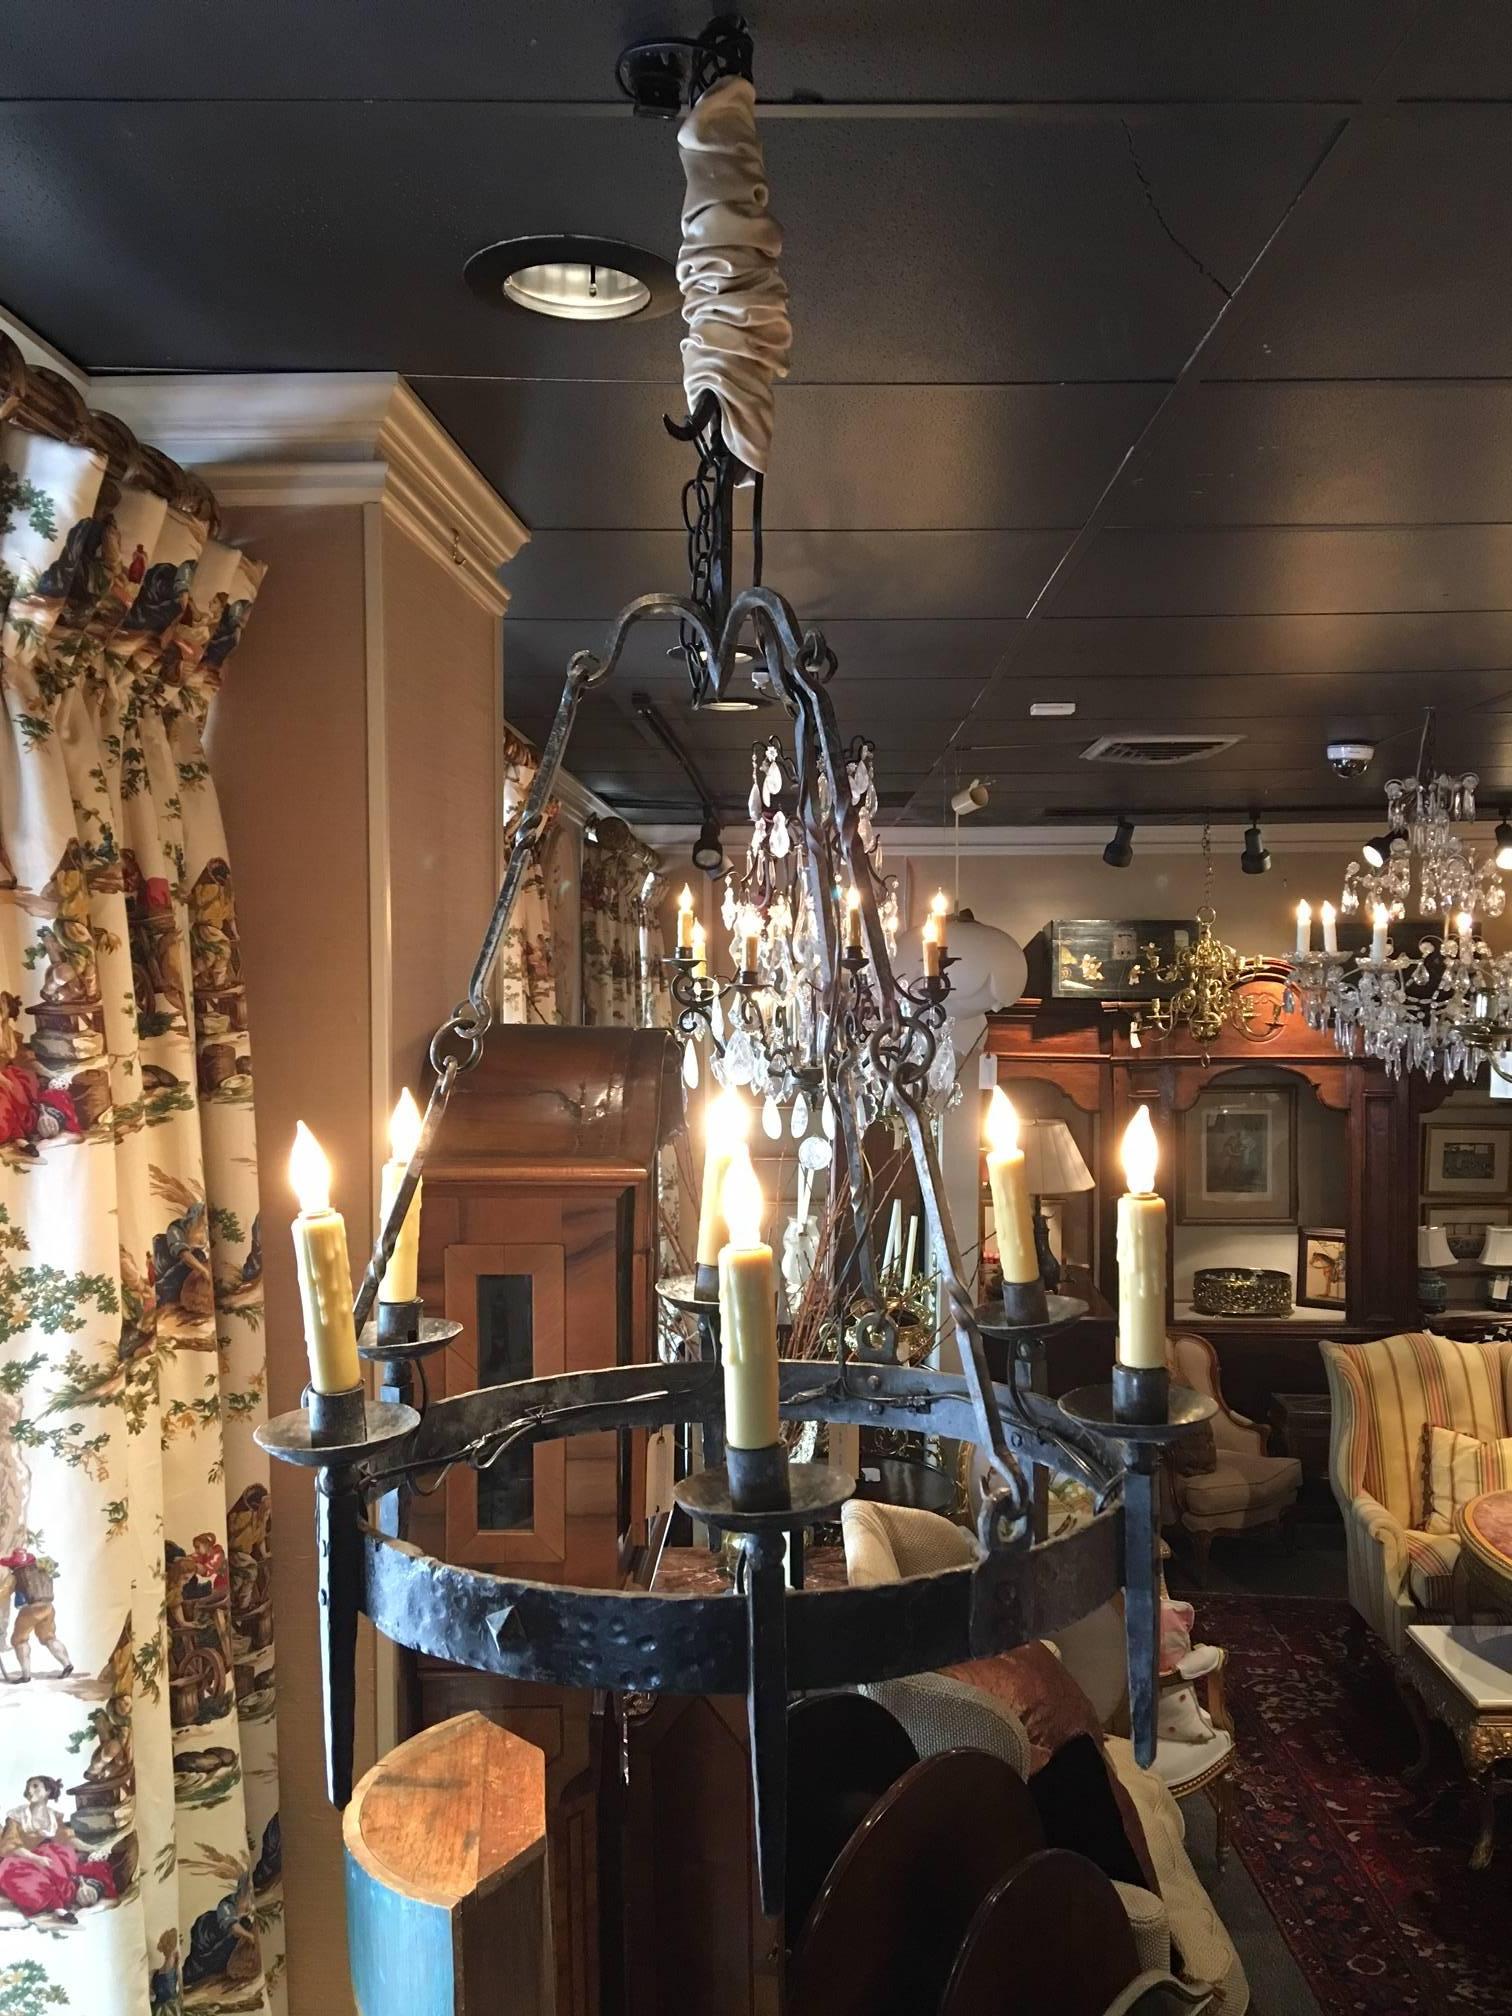 Italian antique forged iron six-light chandelier, 19th century.